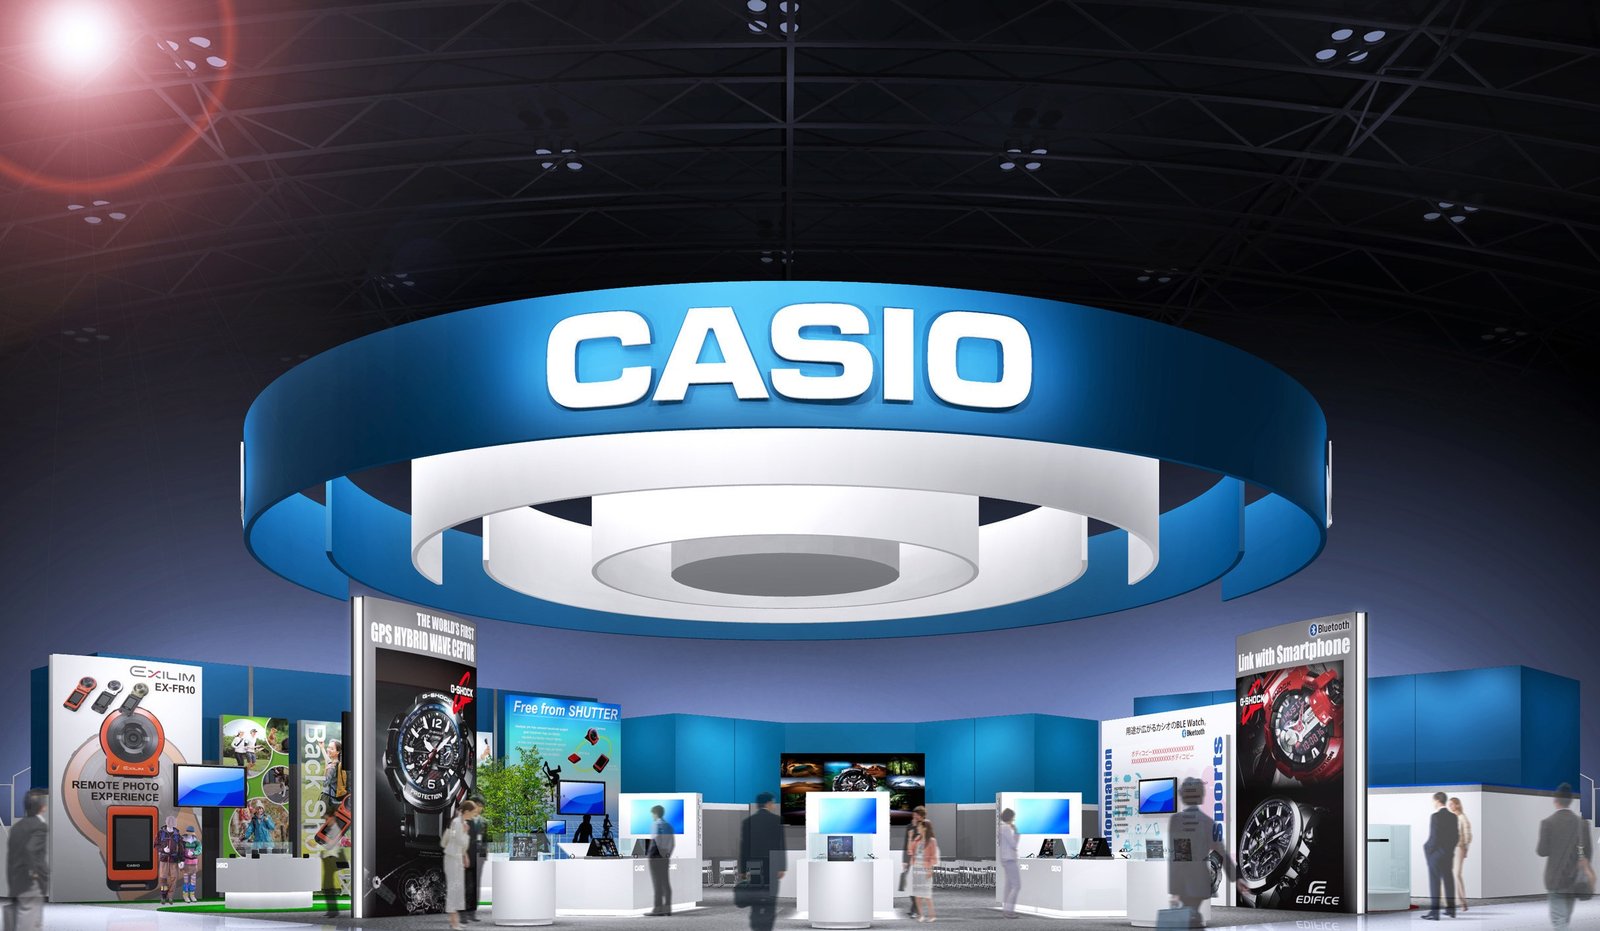 Marketing Strategy of Casio